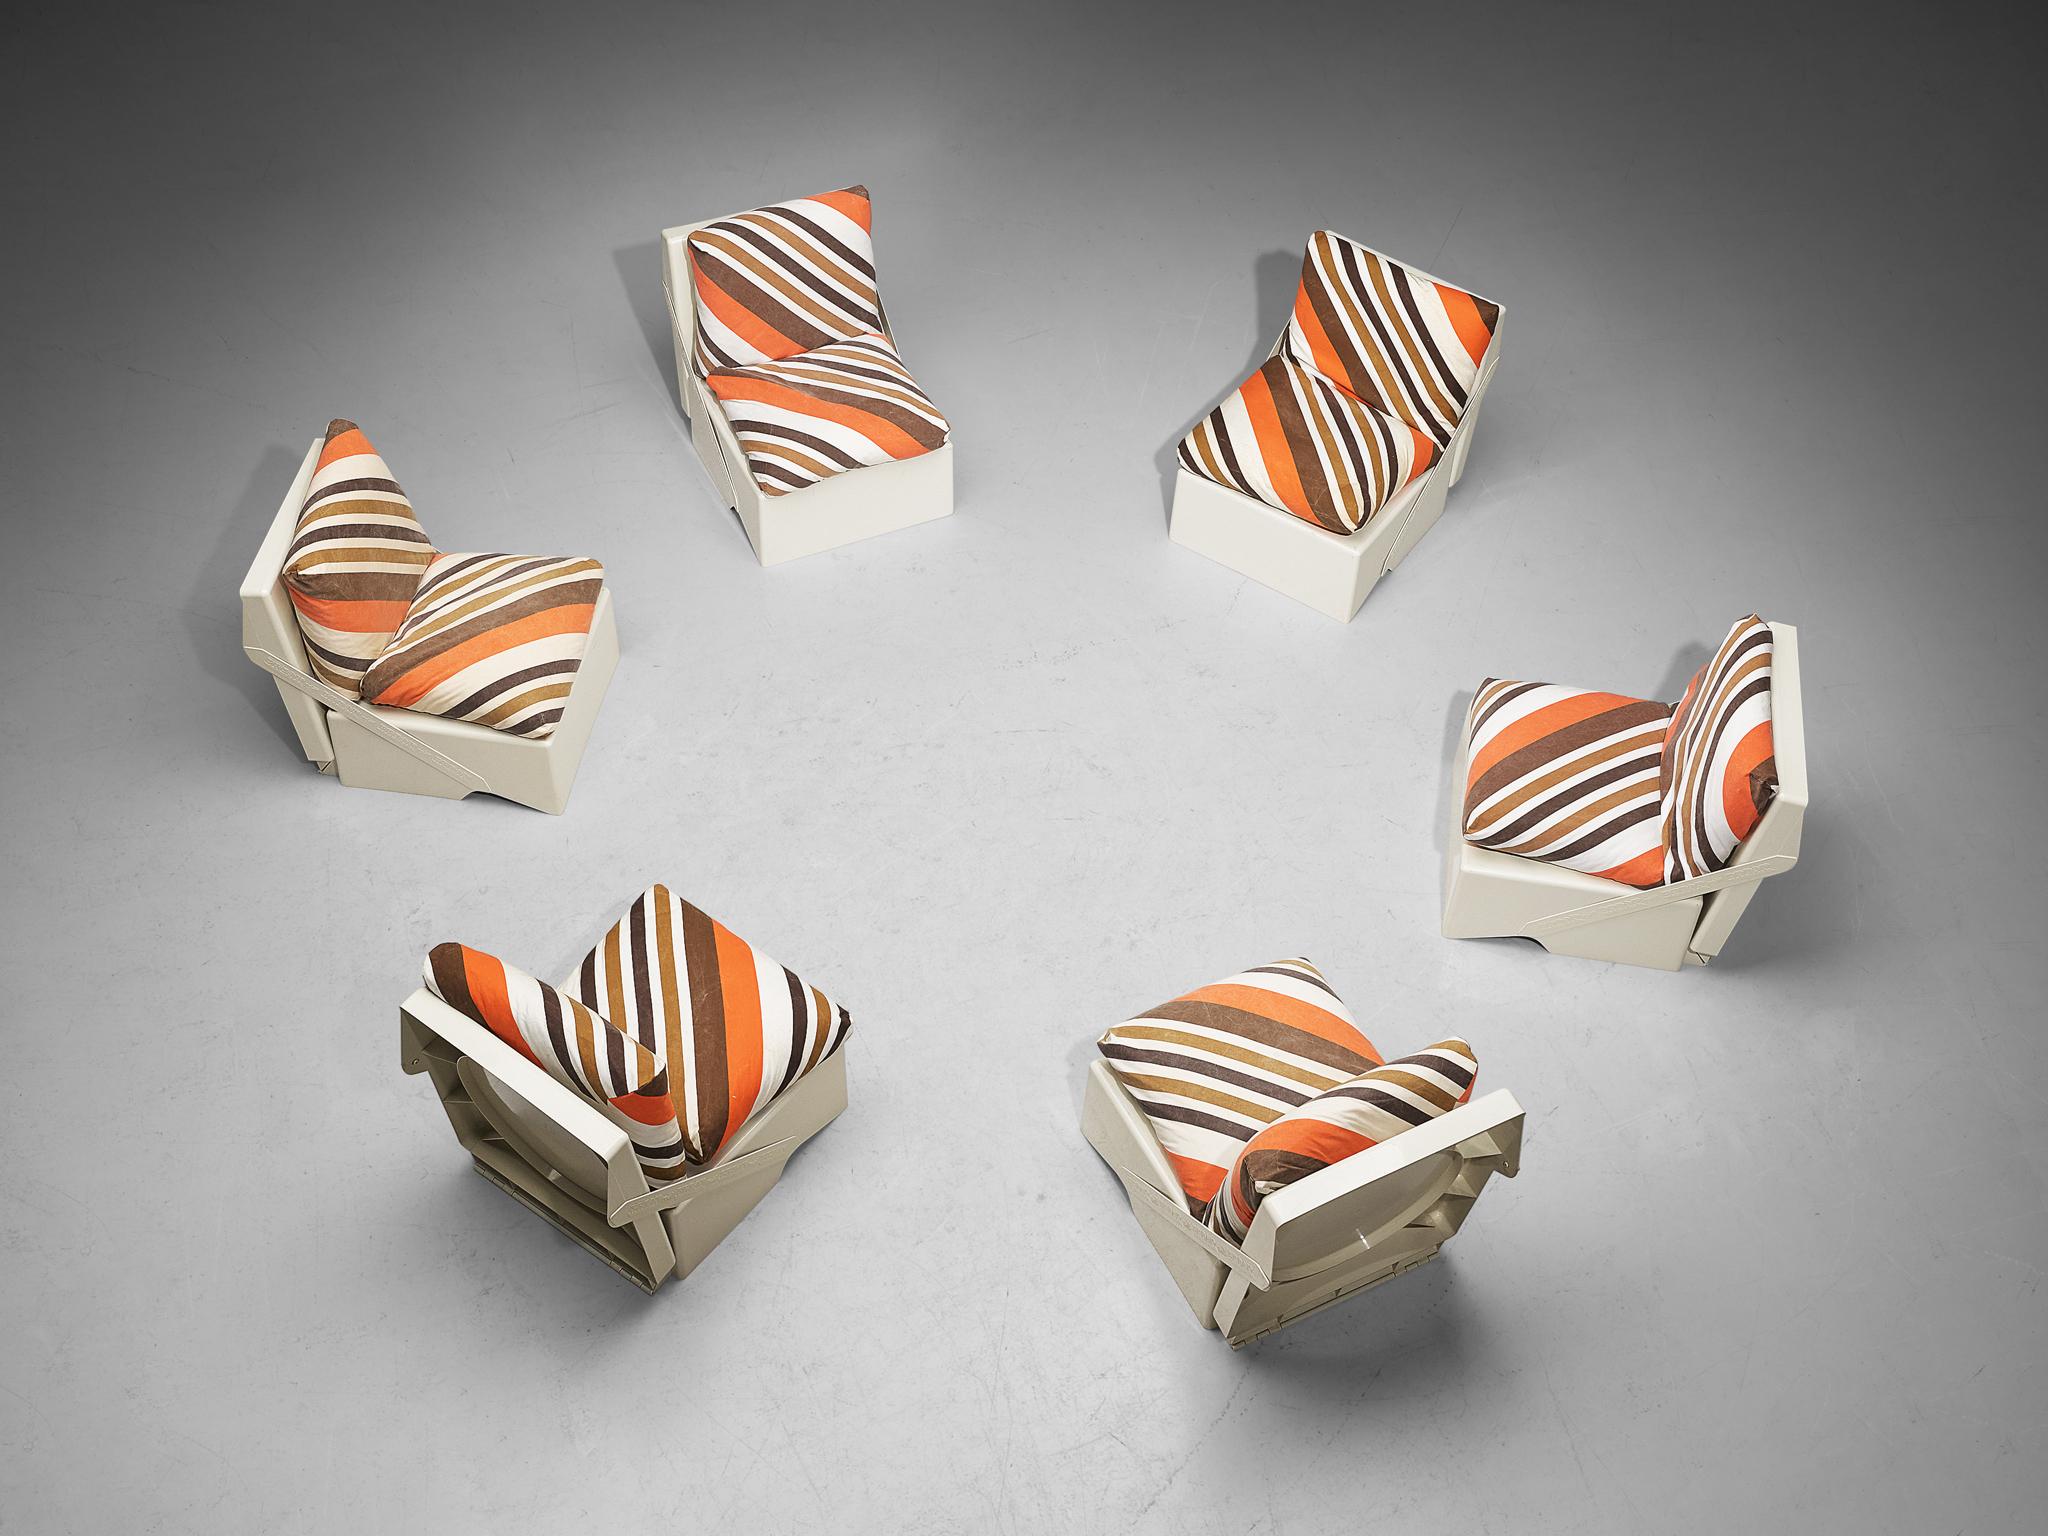 Aldo Barberi for Rossi di Albizzate, ‘Break’ folding lounge chairs, plastic, fabric, Italy, 1970s

This exceptional set of portable folding lounge chairs is designed by the Italian designer Aldo Barberi for his series called ‘Break’. This design